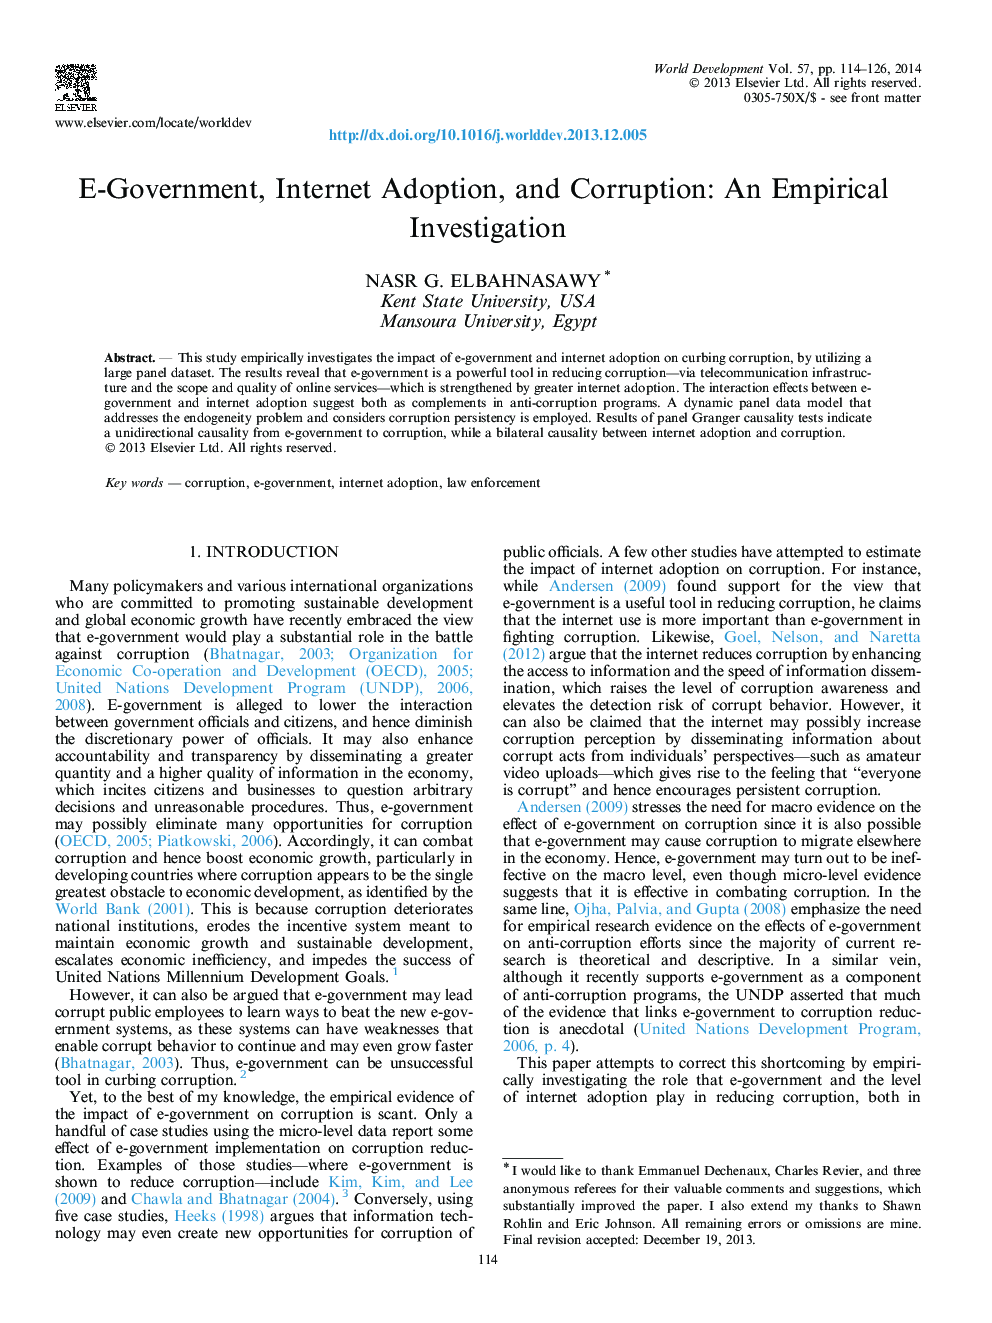 E-Government, Internet Adoption, and Corruption: An Empirical Investigation